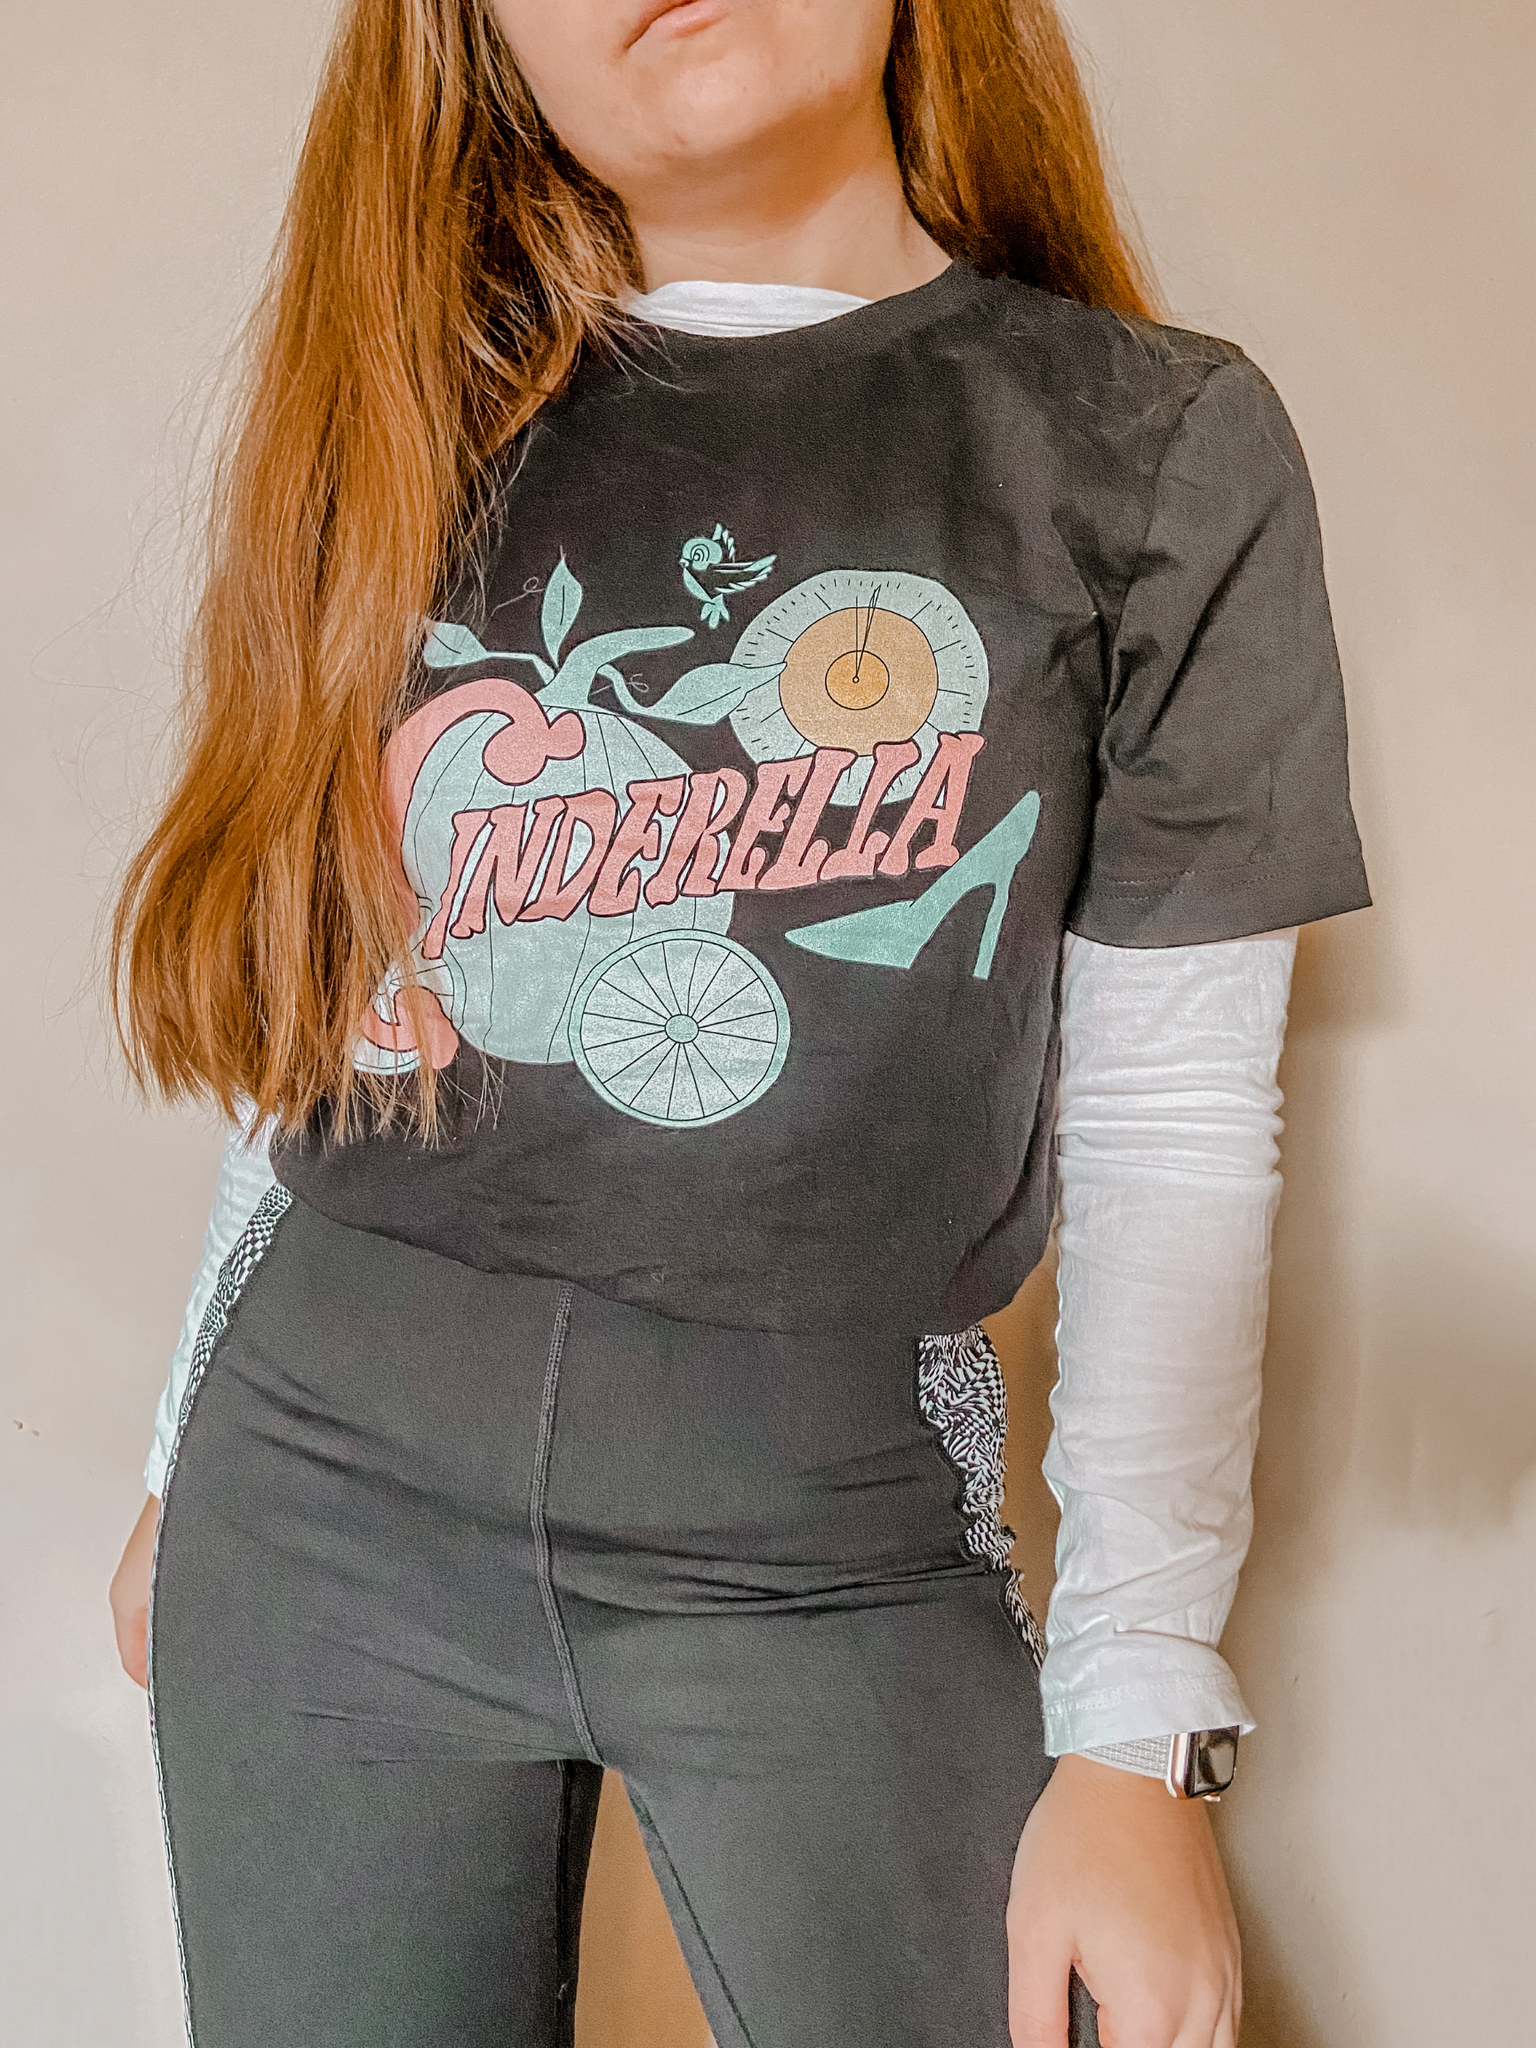 Cinderella Short-Sleeve Unisex T-Shirt